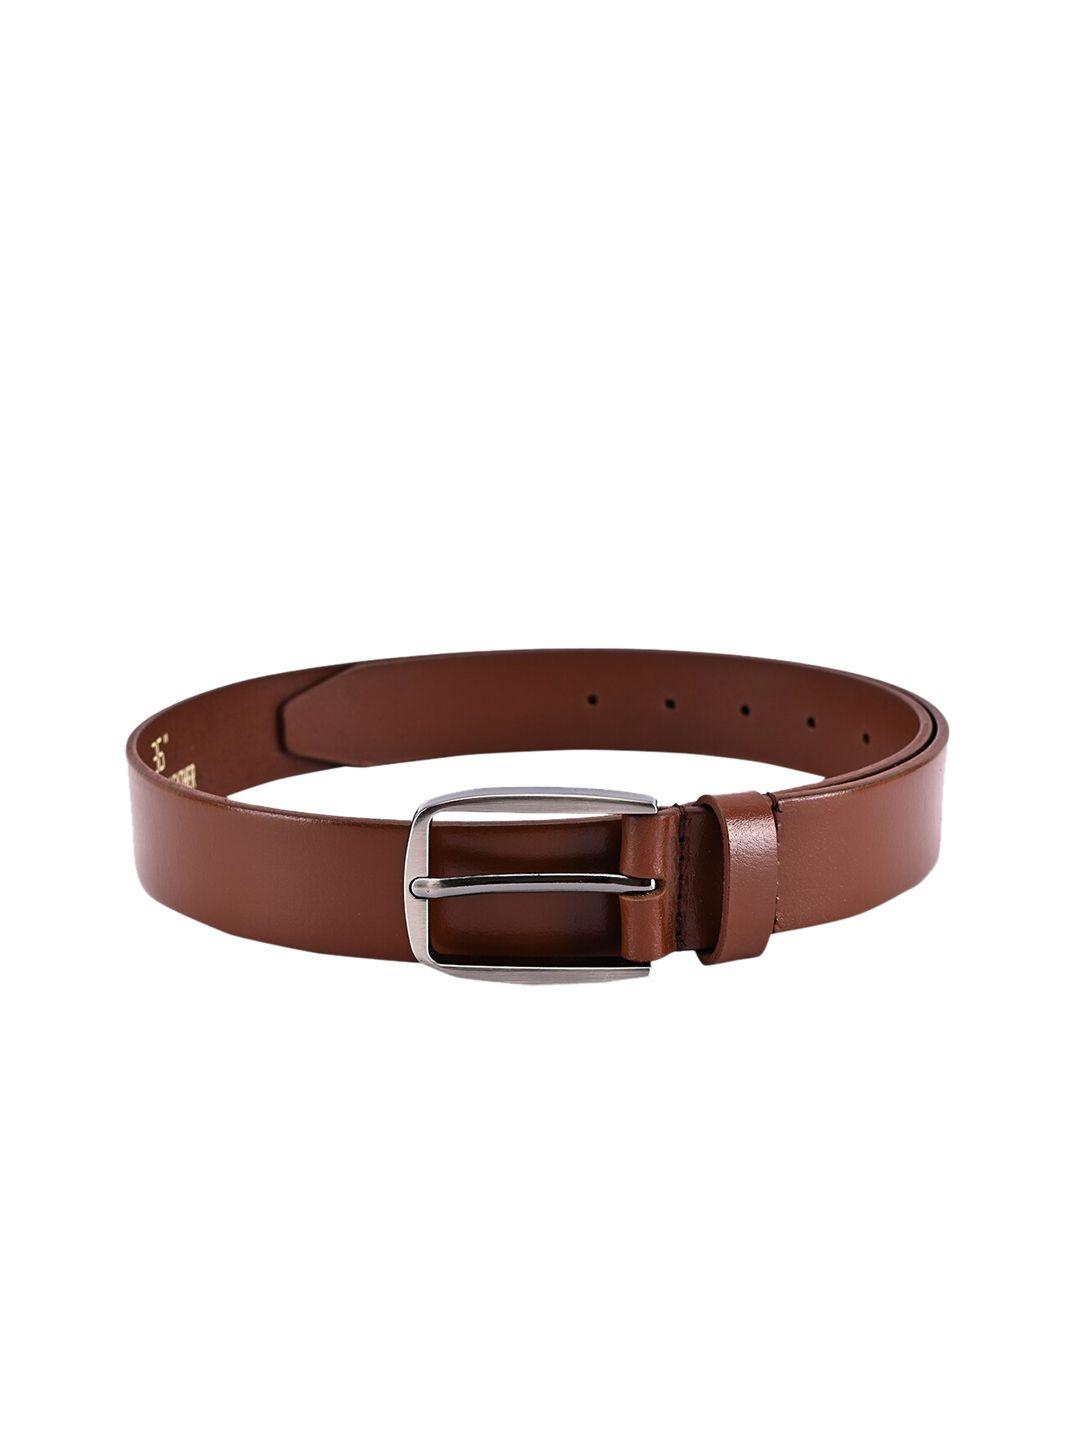 buckleup men tan brown leather belt